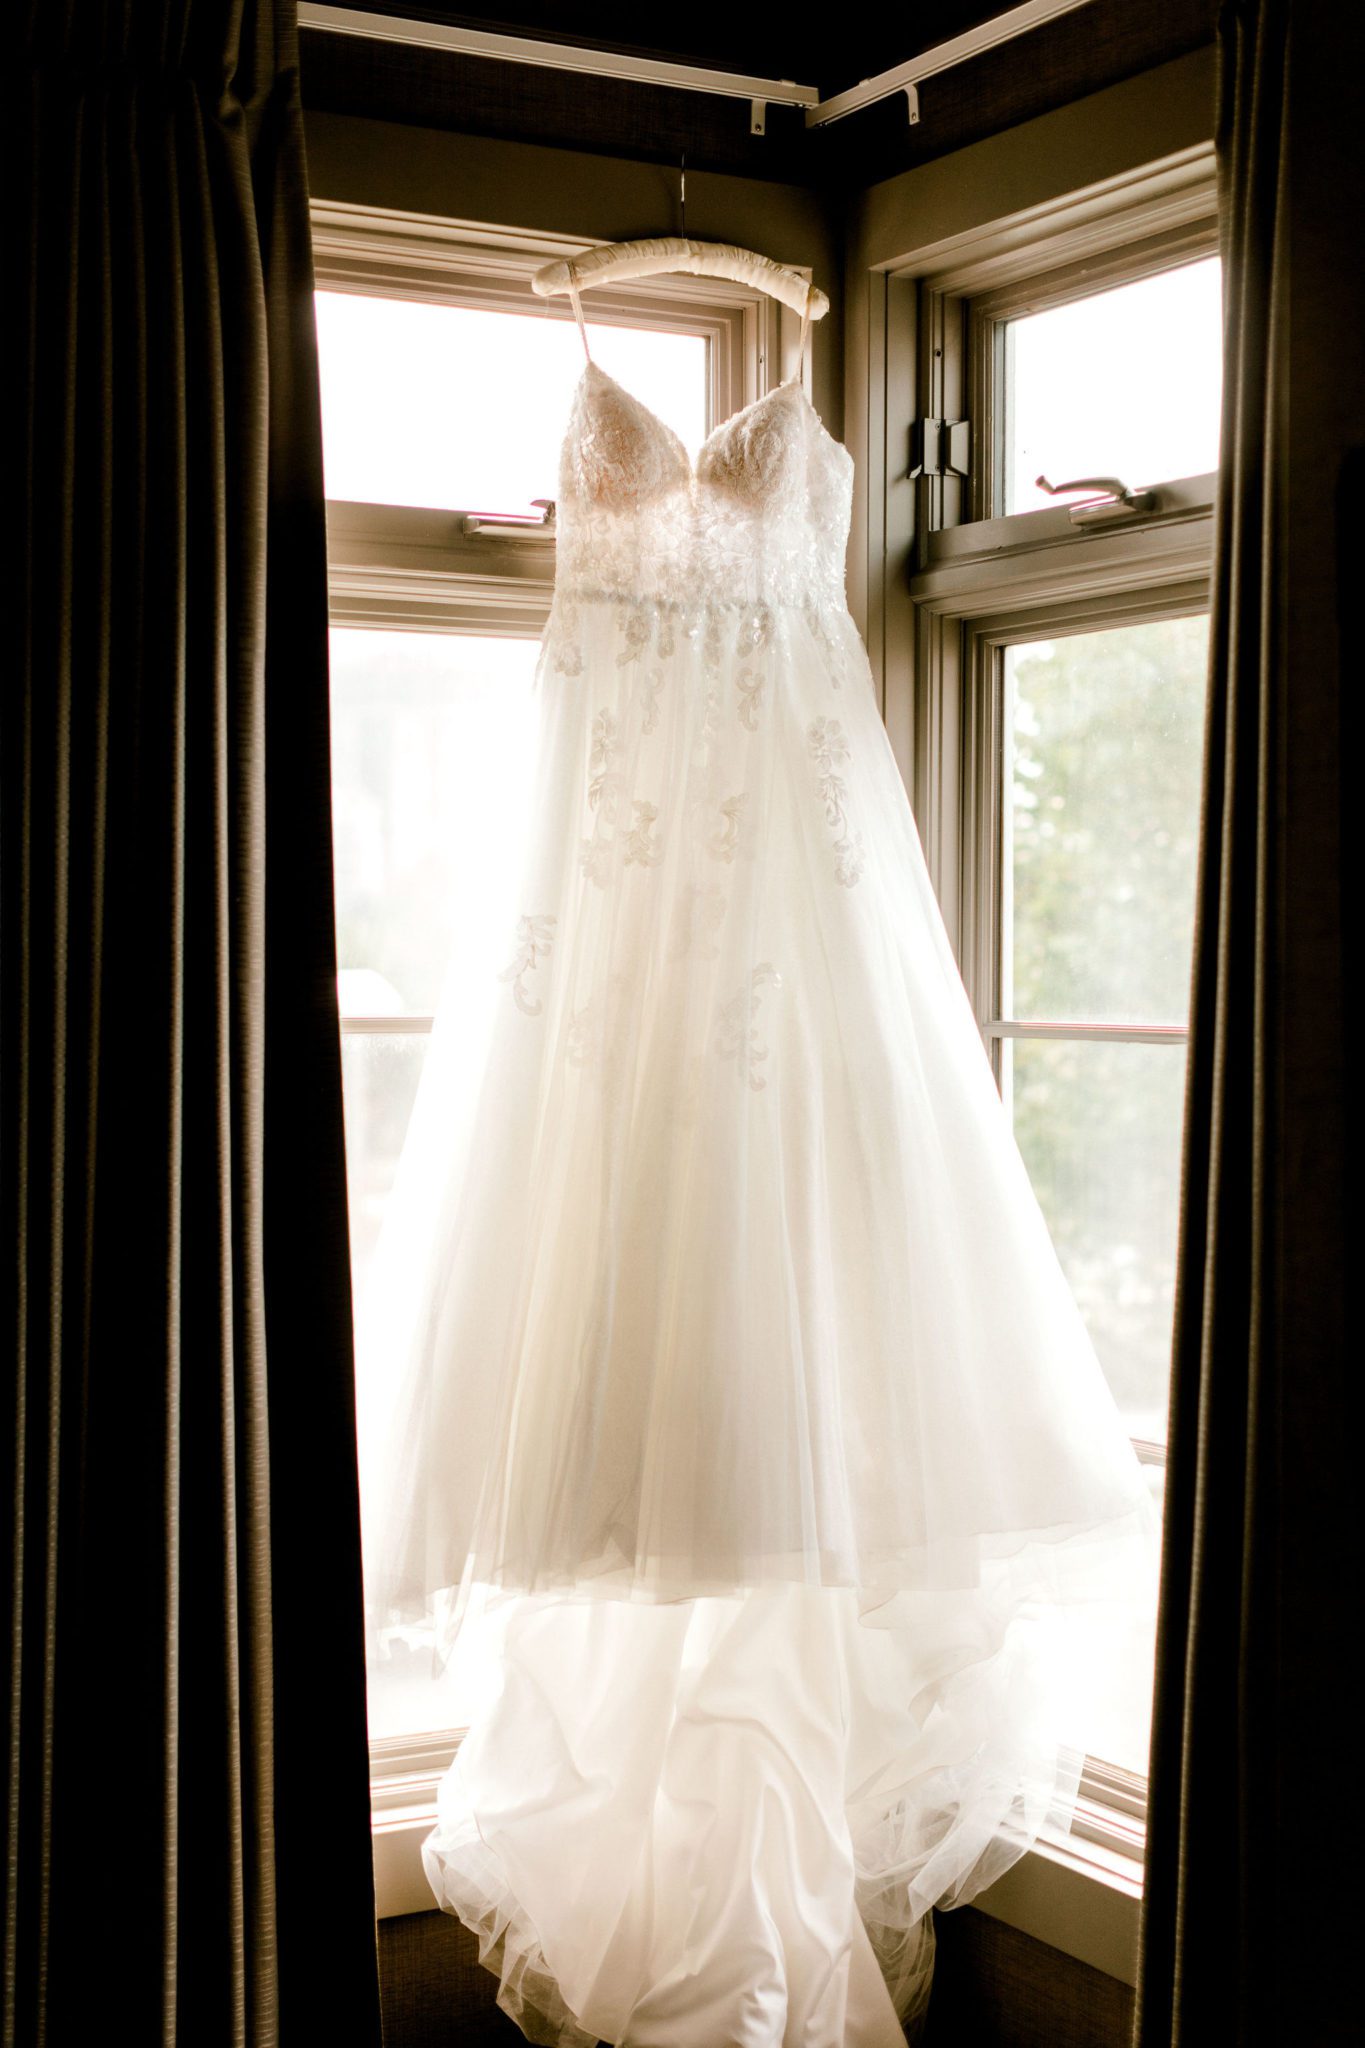 Flowing wedding gown silhouette in a window